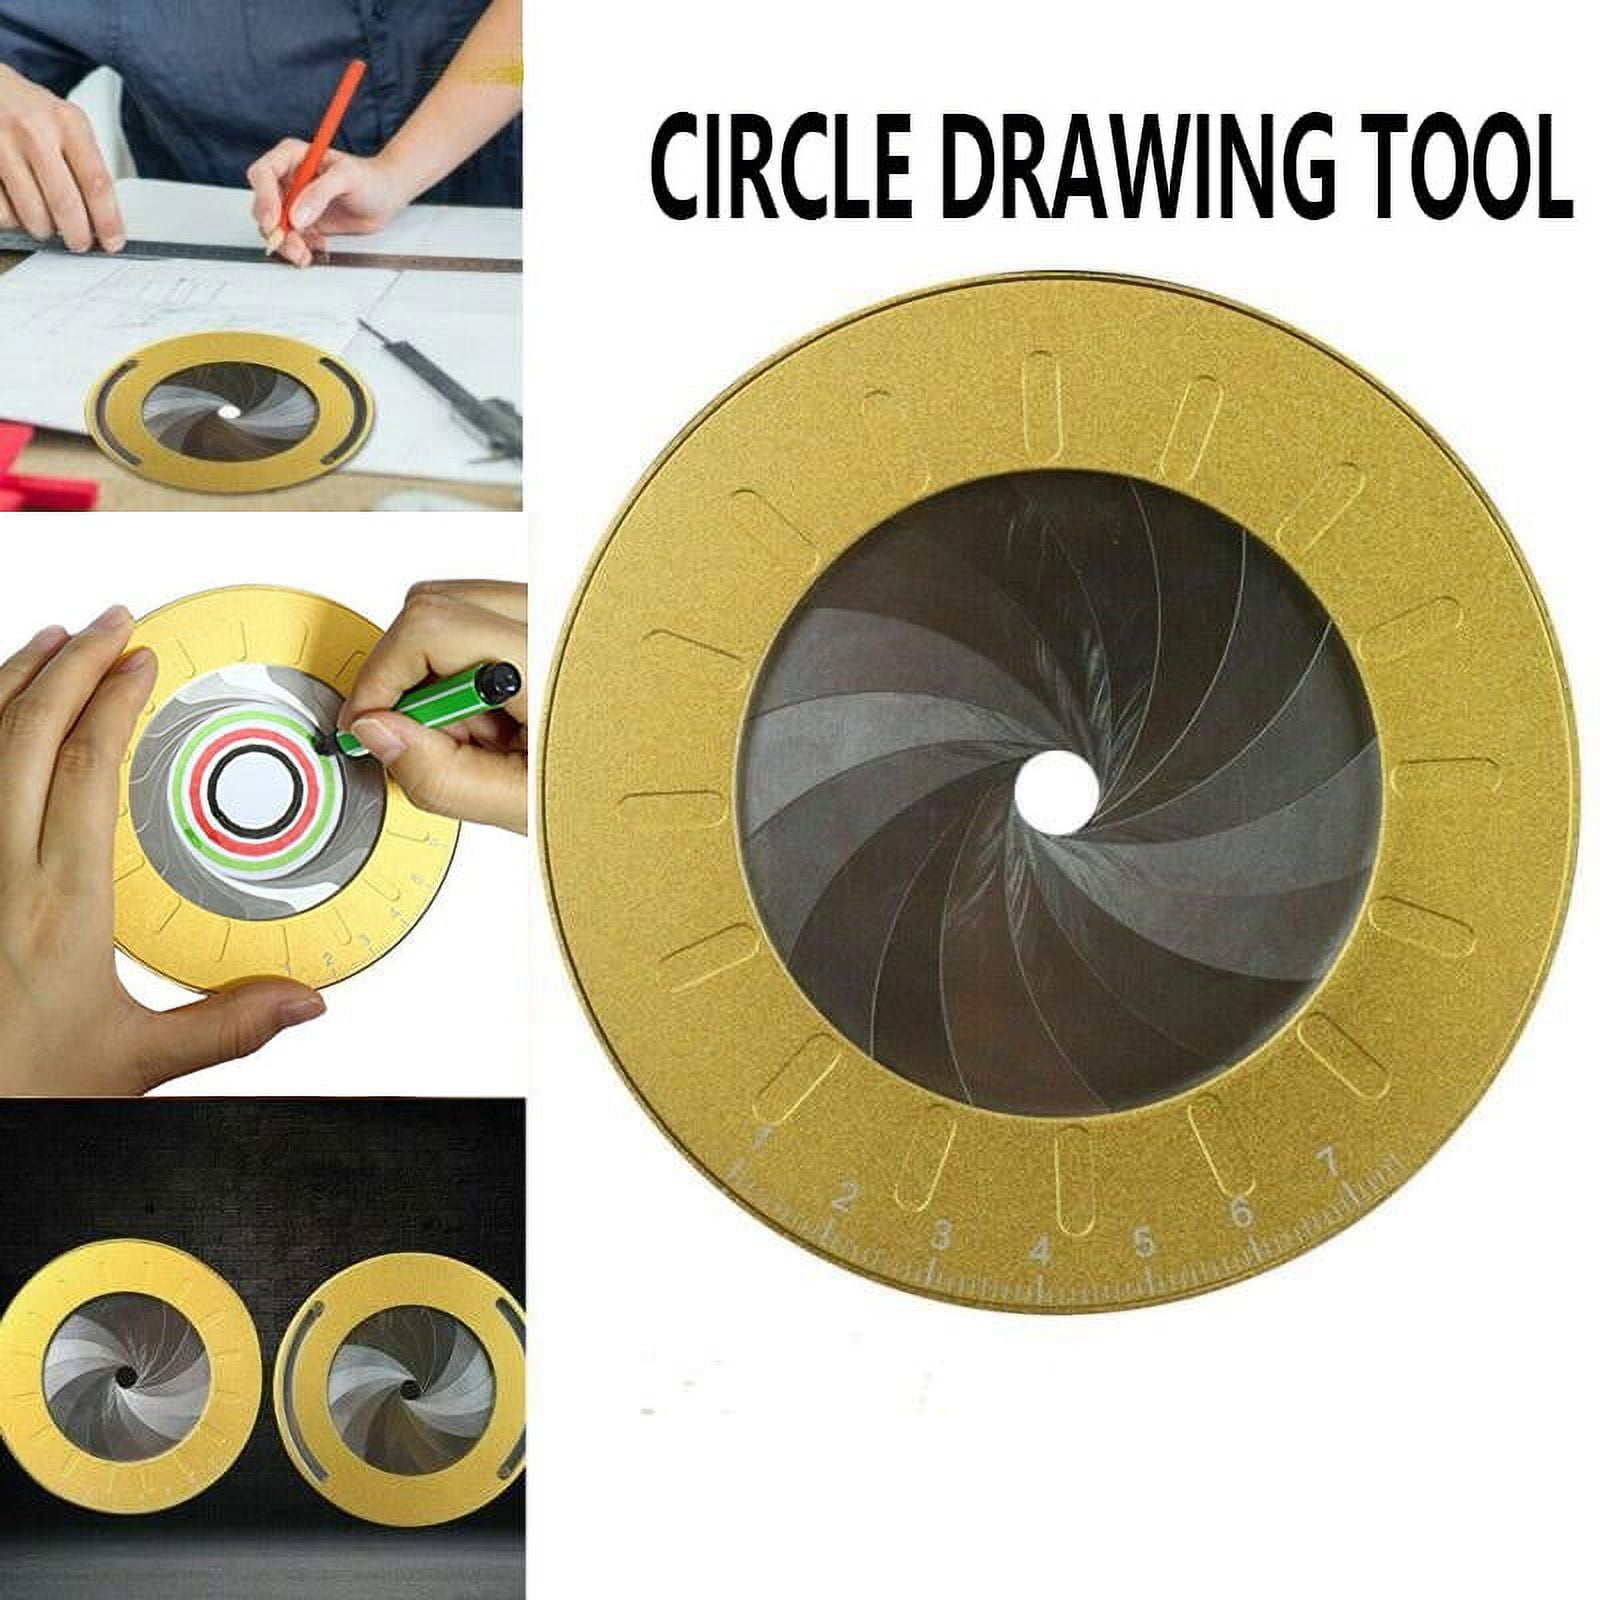 915 Generation Adjustable Circle Drawing Ruler Tool, Professional Round